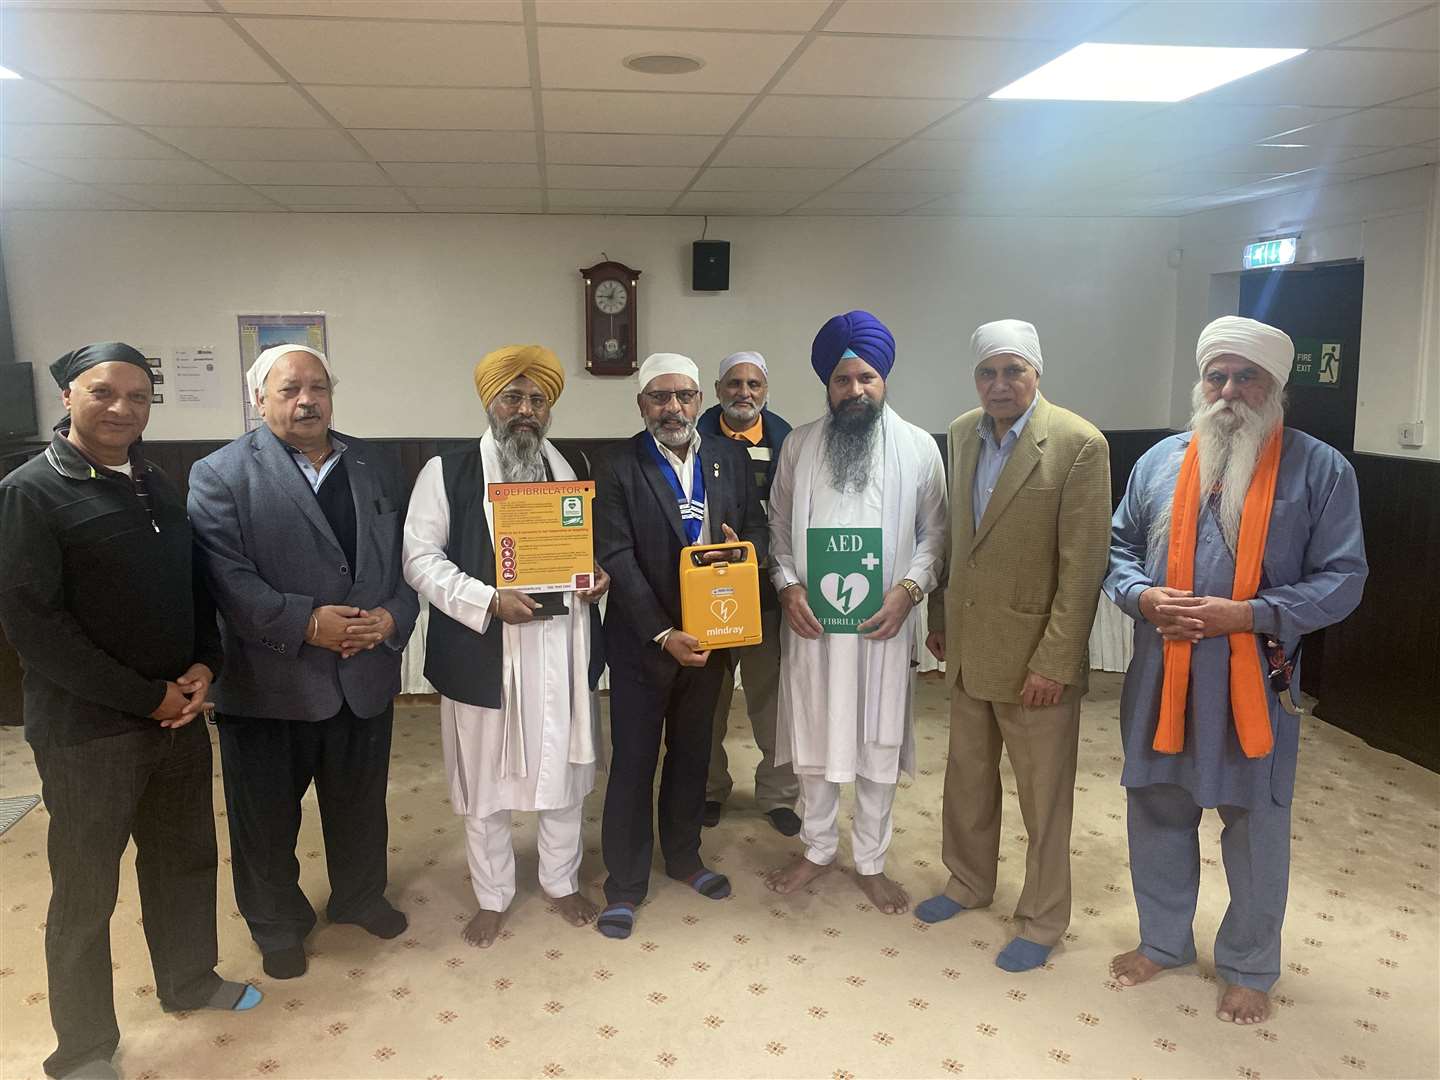 Dartford Lions Club president Avtar Sandhu presented a defibrillator to the Sikh Temple in Highfield Road, Dartford